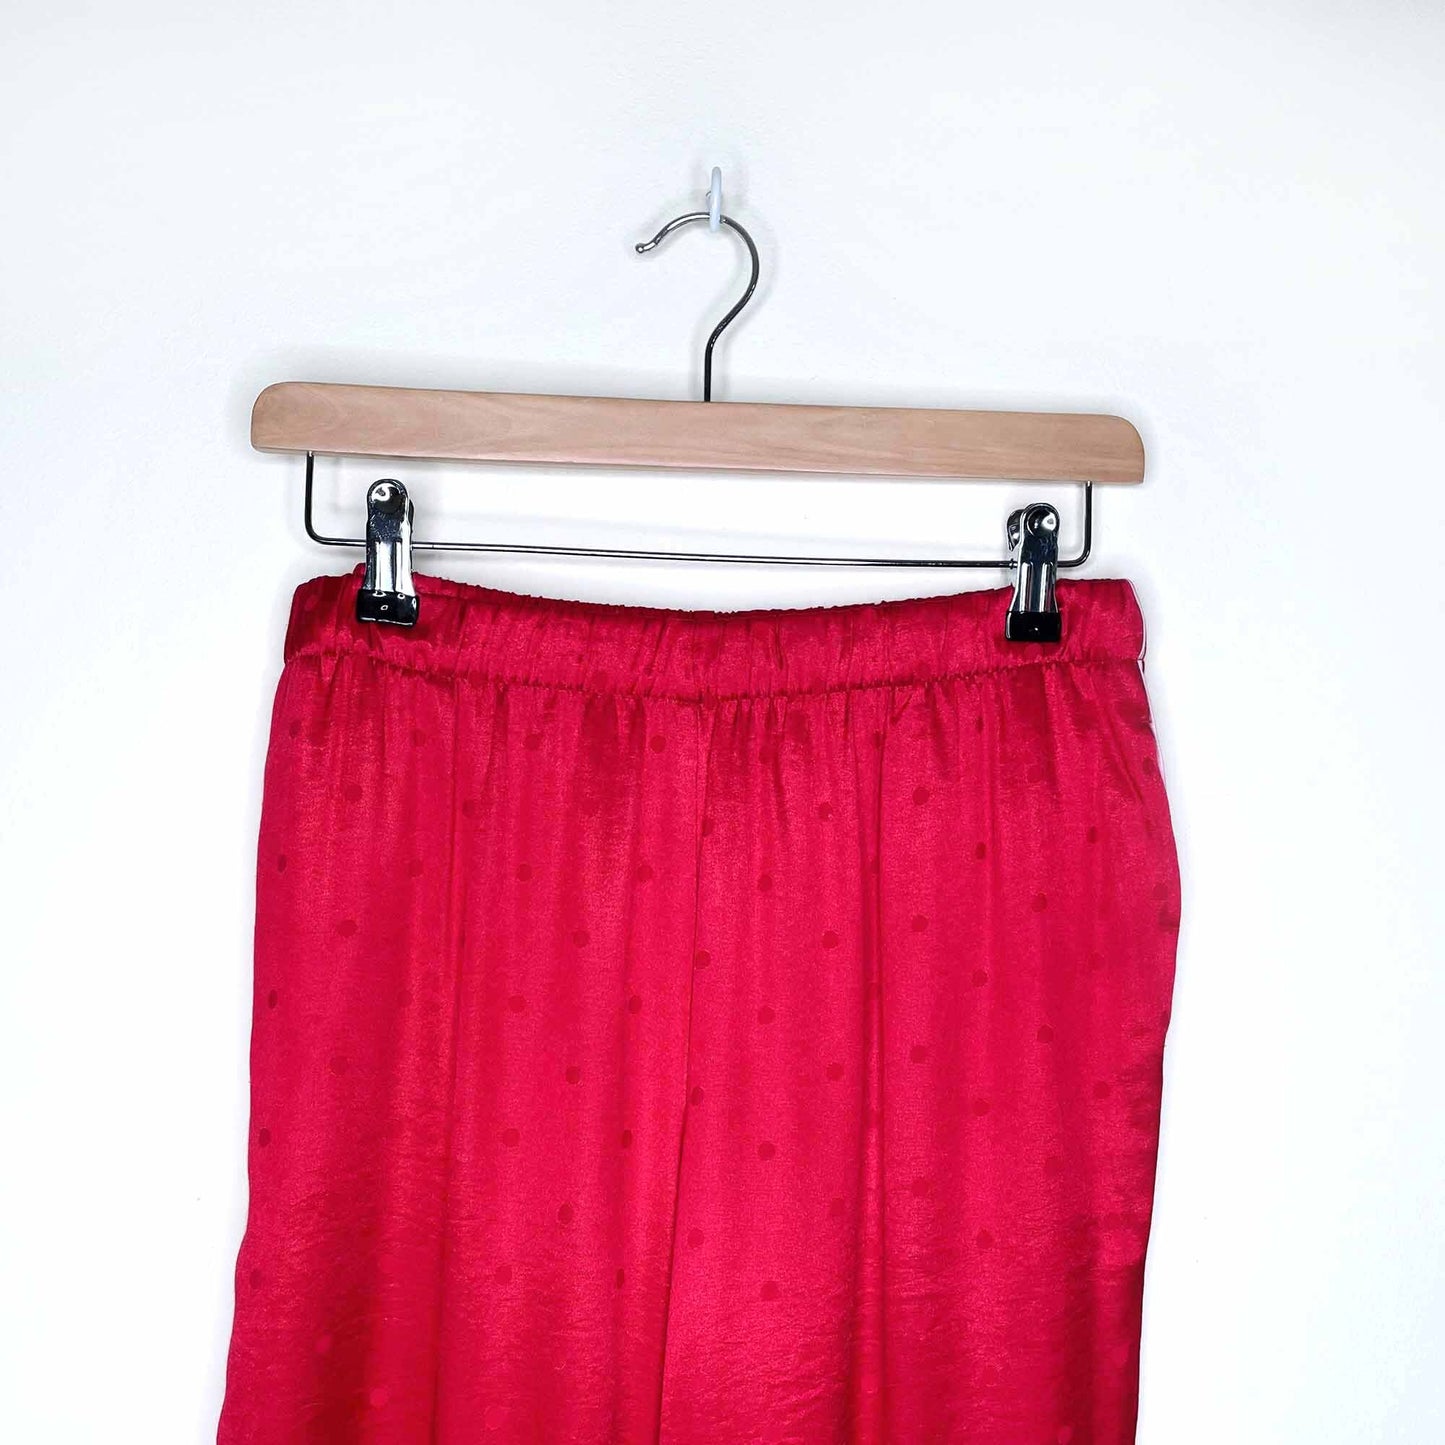 victoria's secret red satin polka dot pajama pants - size xs